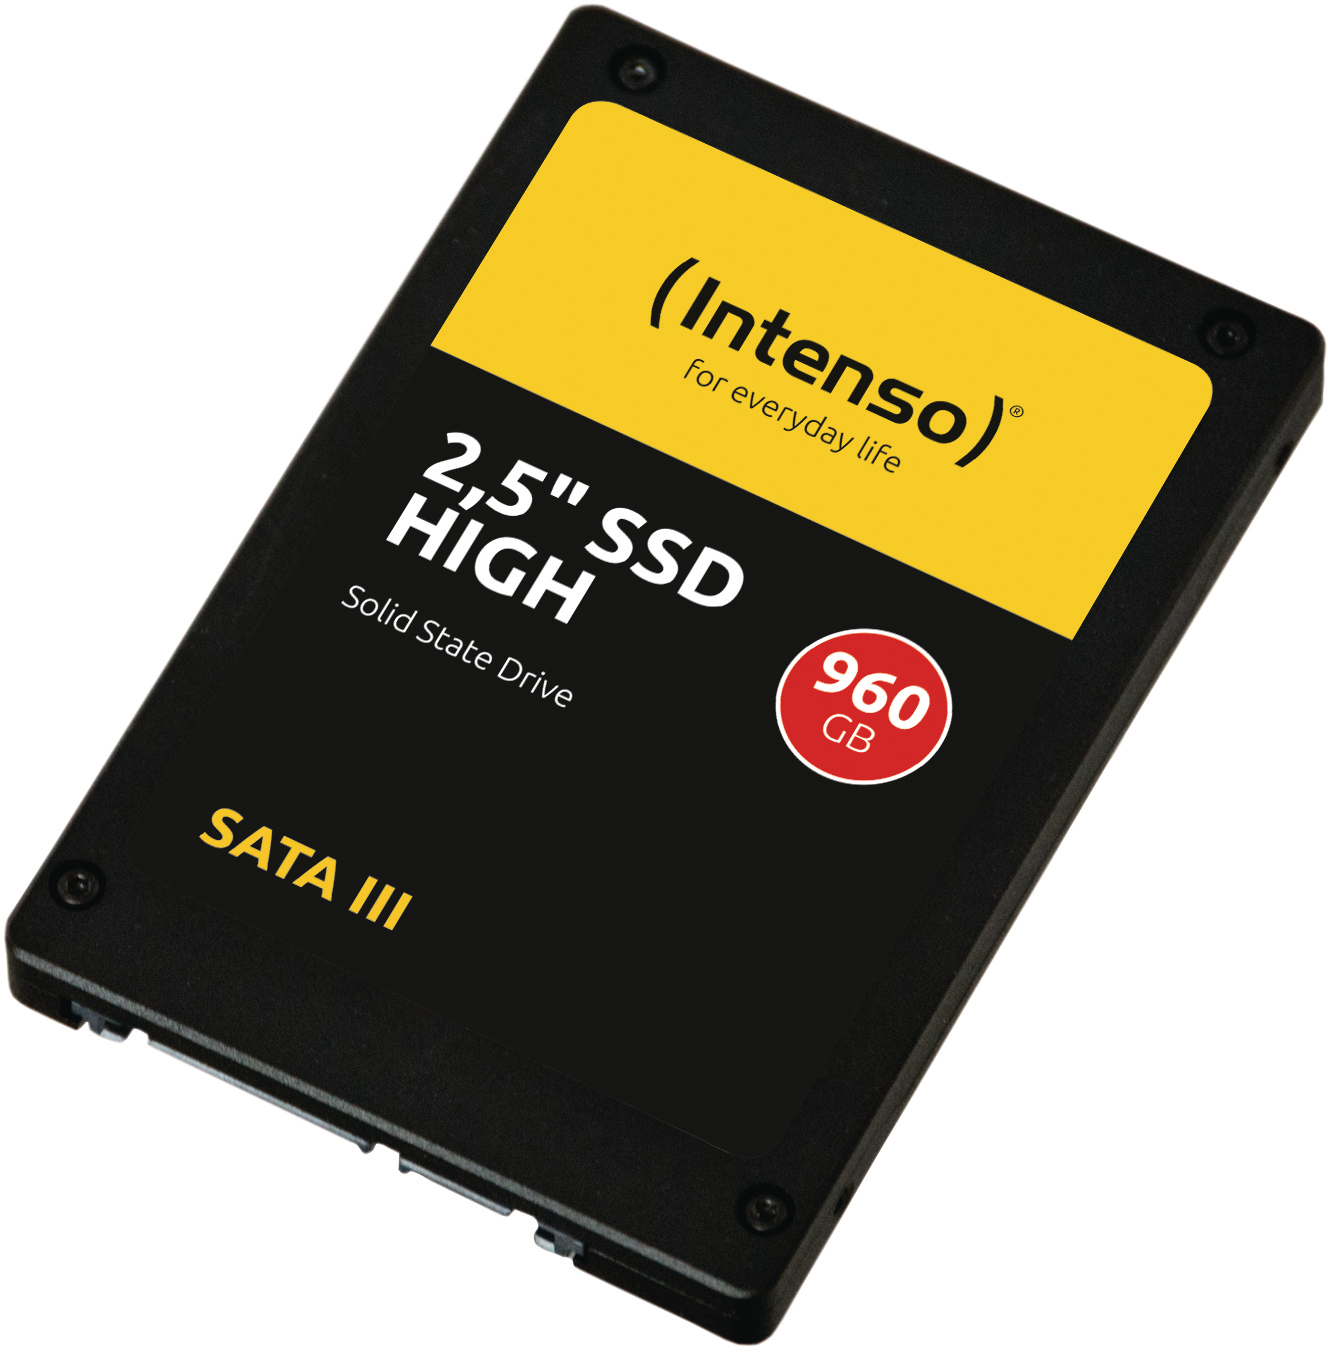 INTENSO SSD HIGH 960GB 3813460 Sata III Sata III